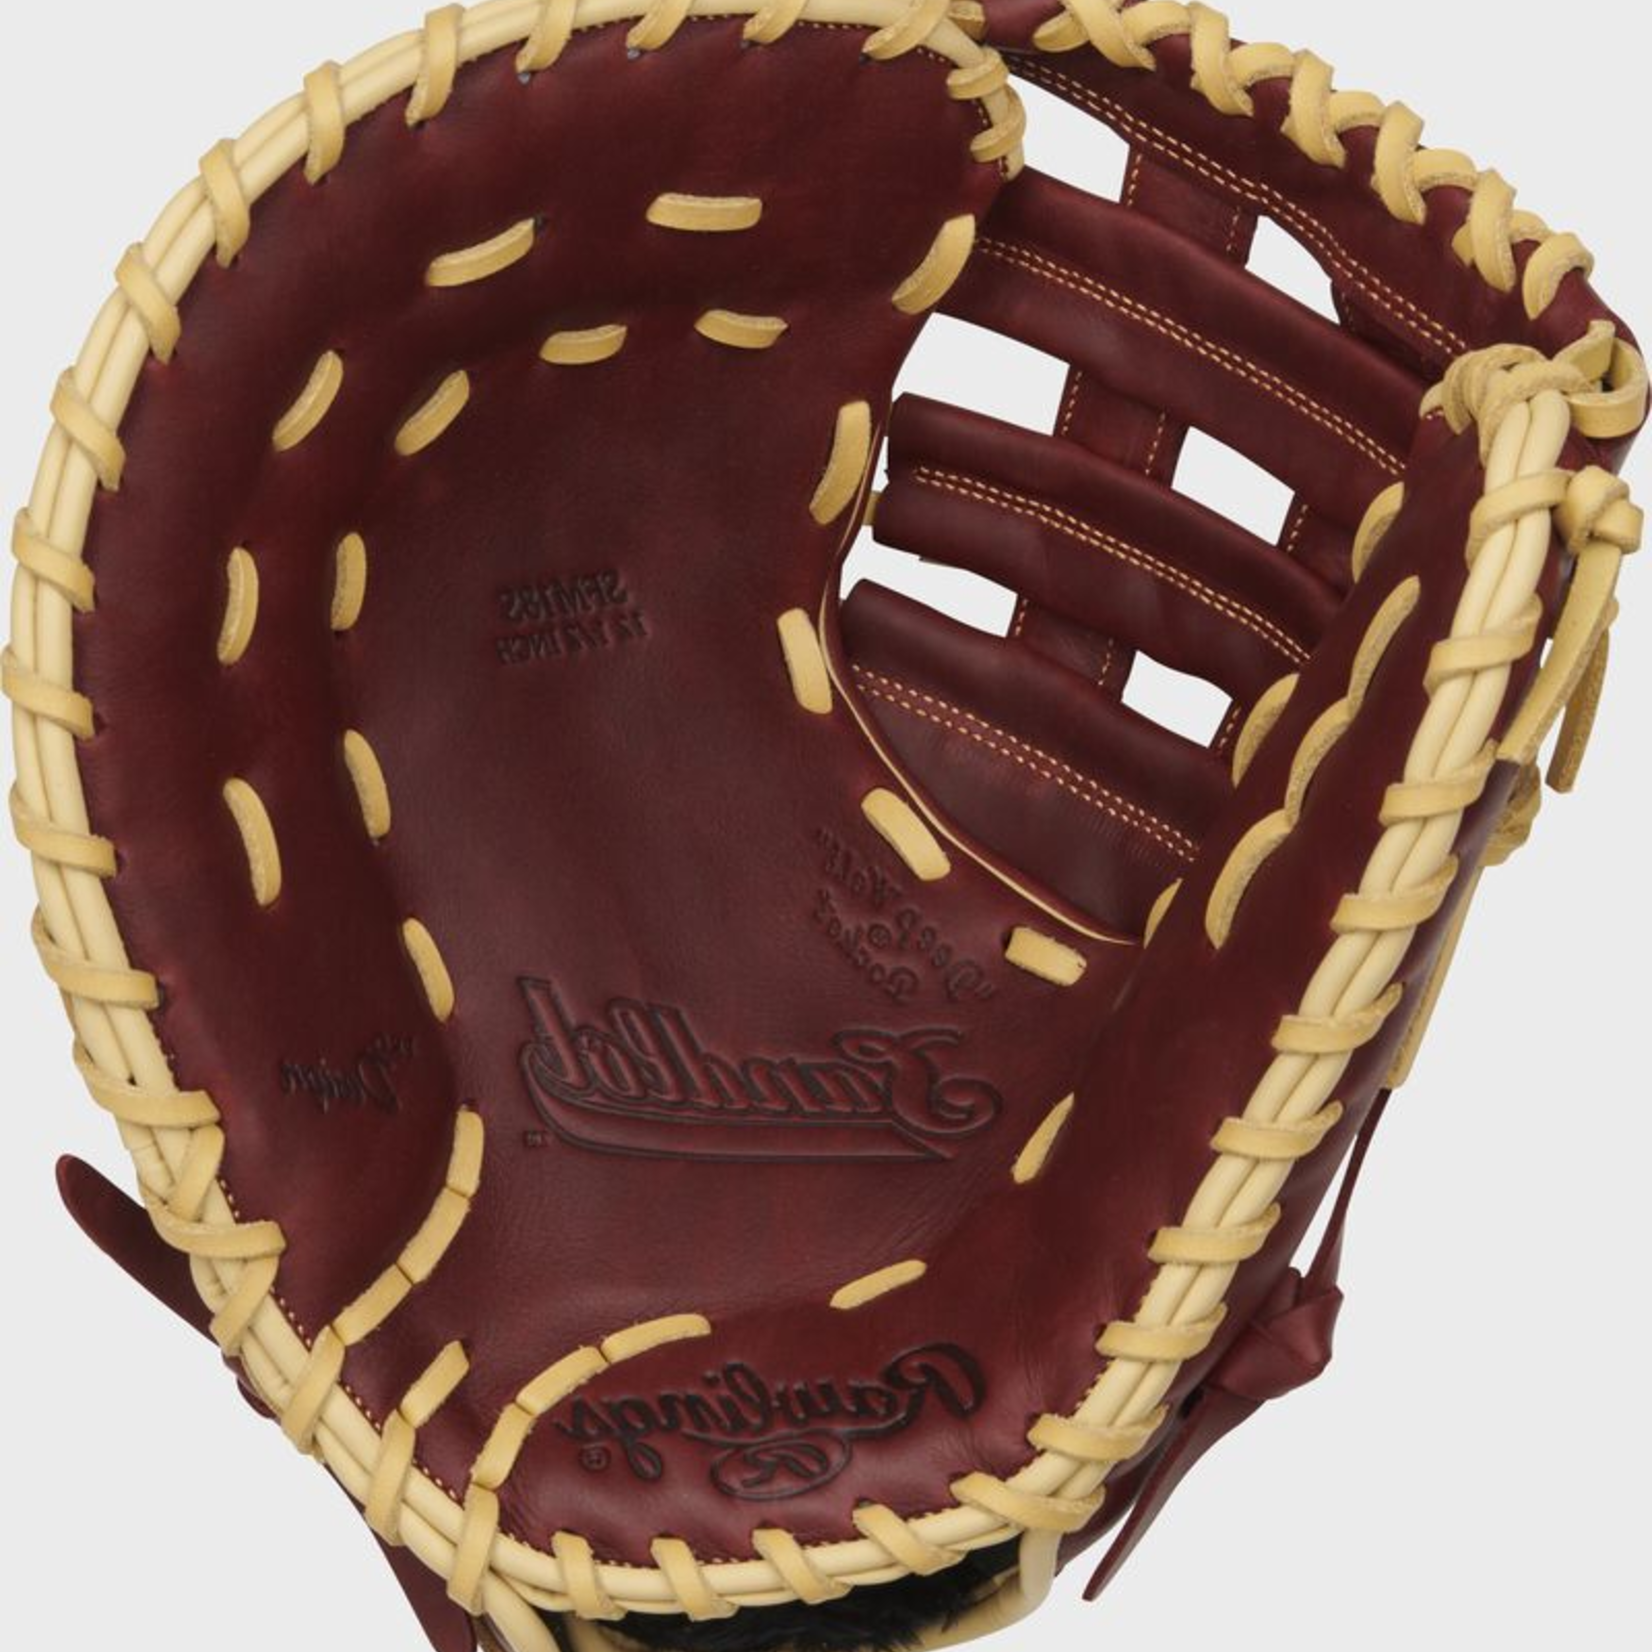 Rawlings Rawlings Baseball Glove, Sandlot Series SFM18S, 12.5”, Full Right, First Base Mitt